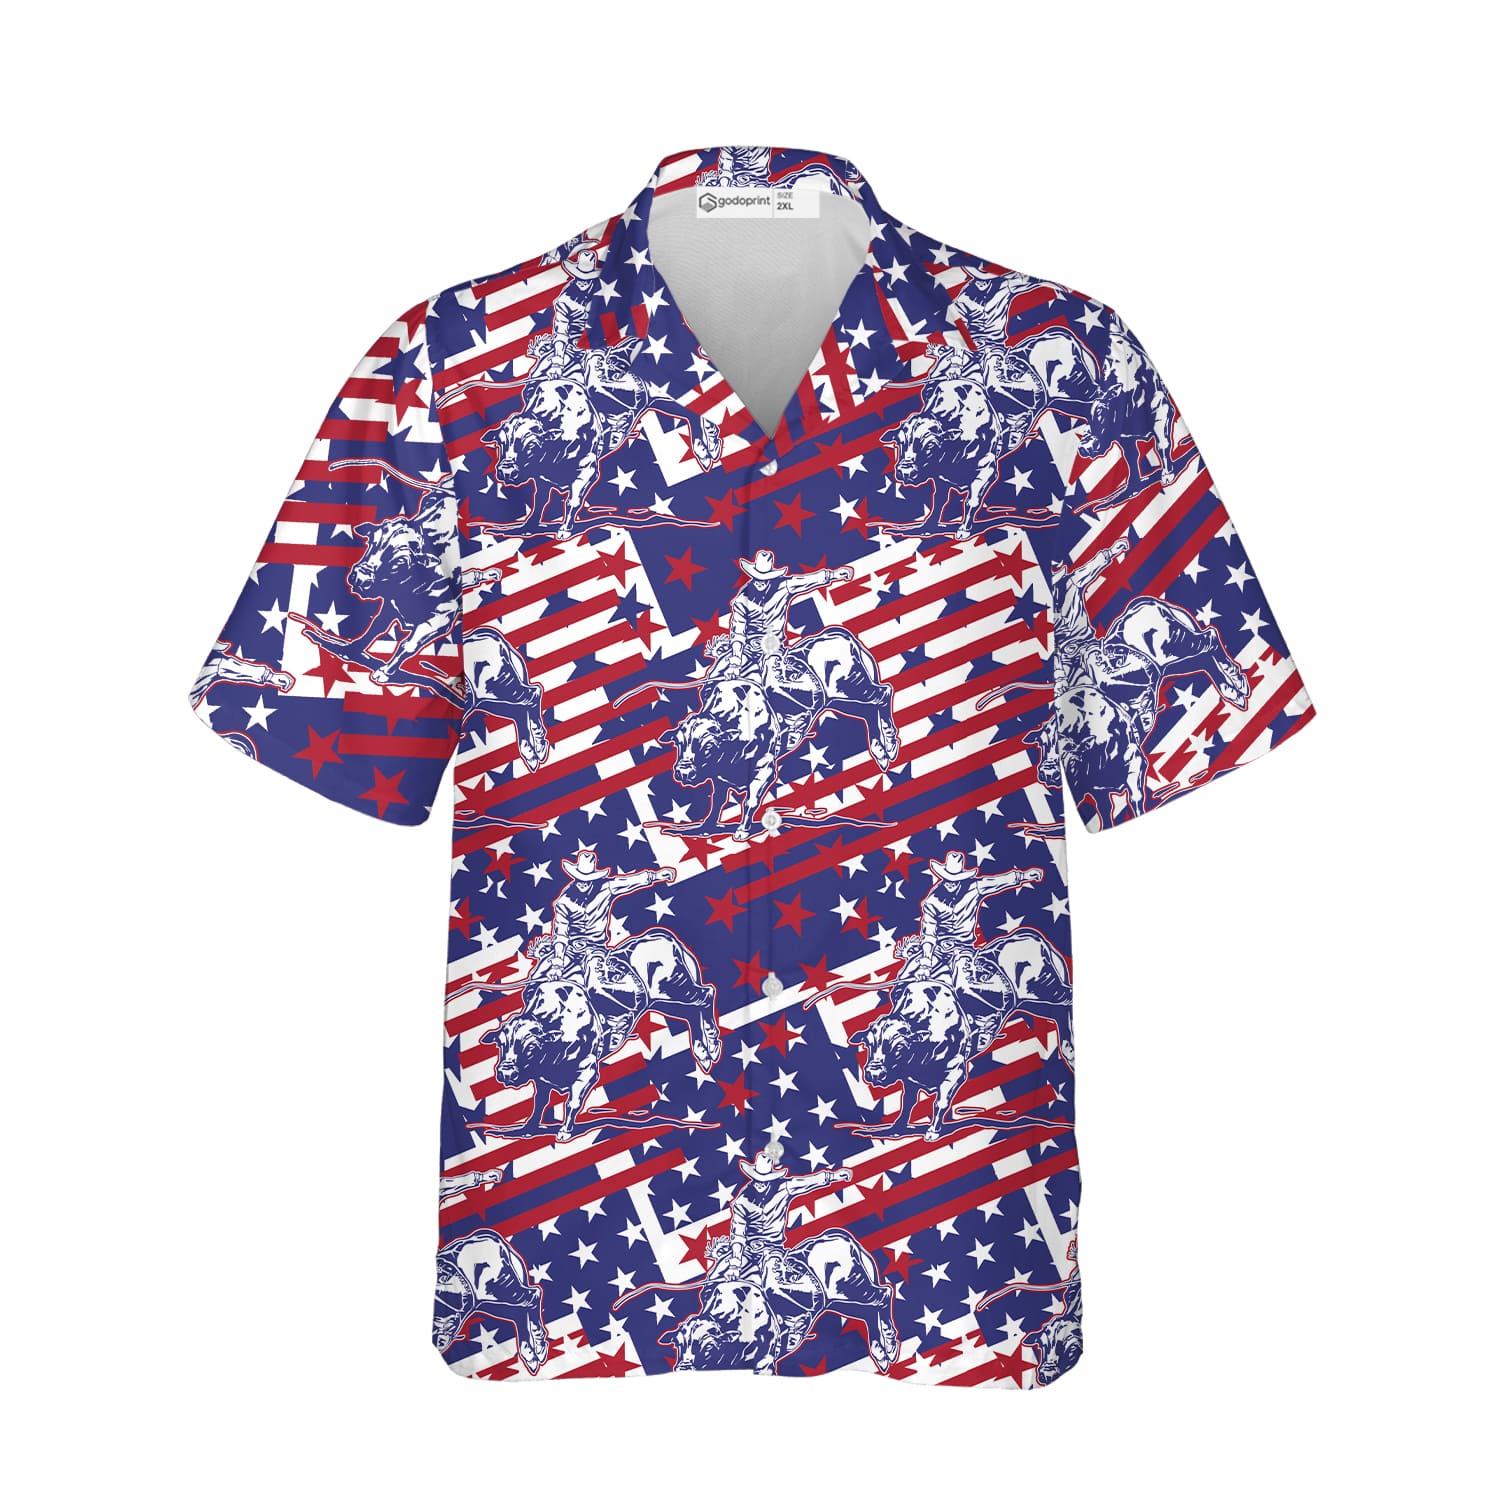 Rodeo Bull Rider Patriotic American Flag Hawaiian Shirt / Cowboys Button Down Summer Beach Dress Shirts